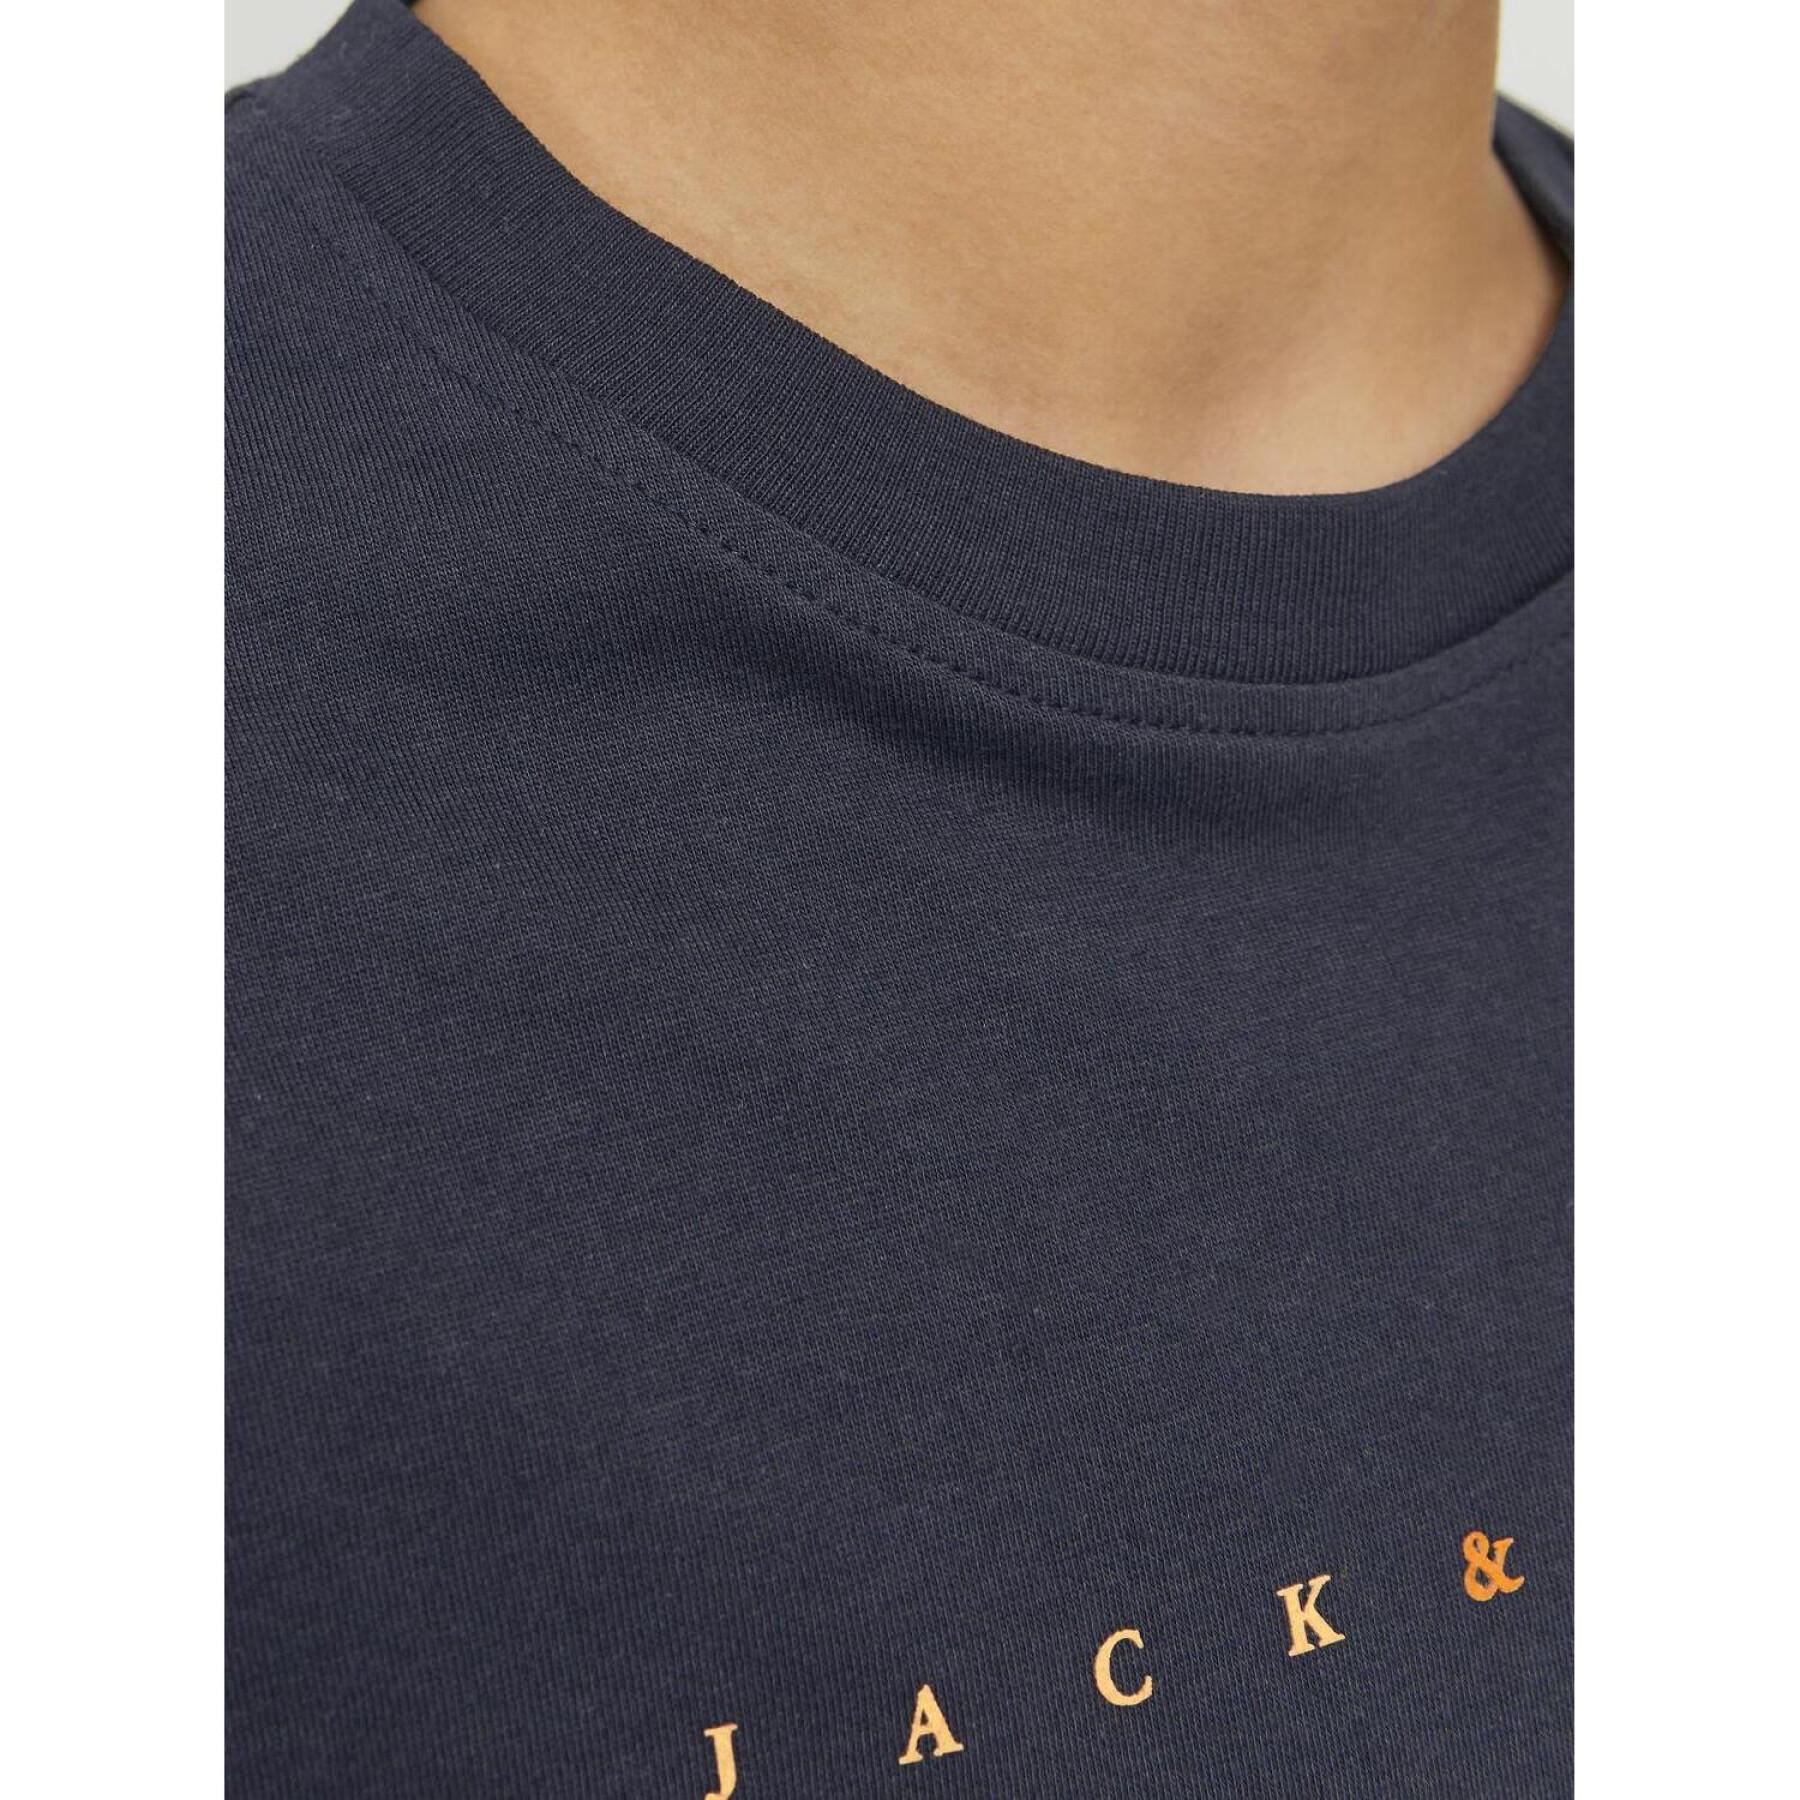 Maglietta per bambini Jack & Jones Star